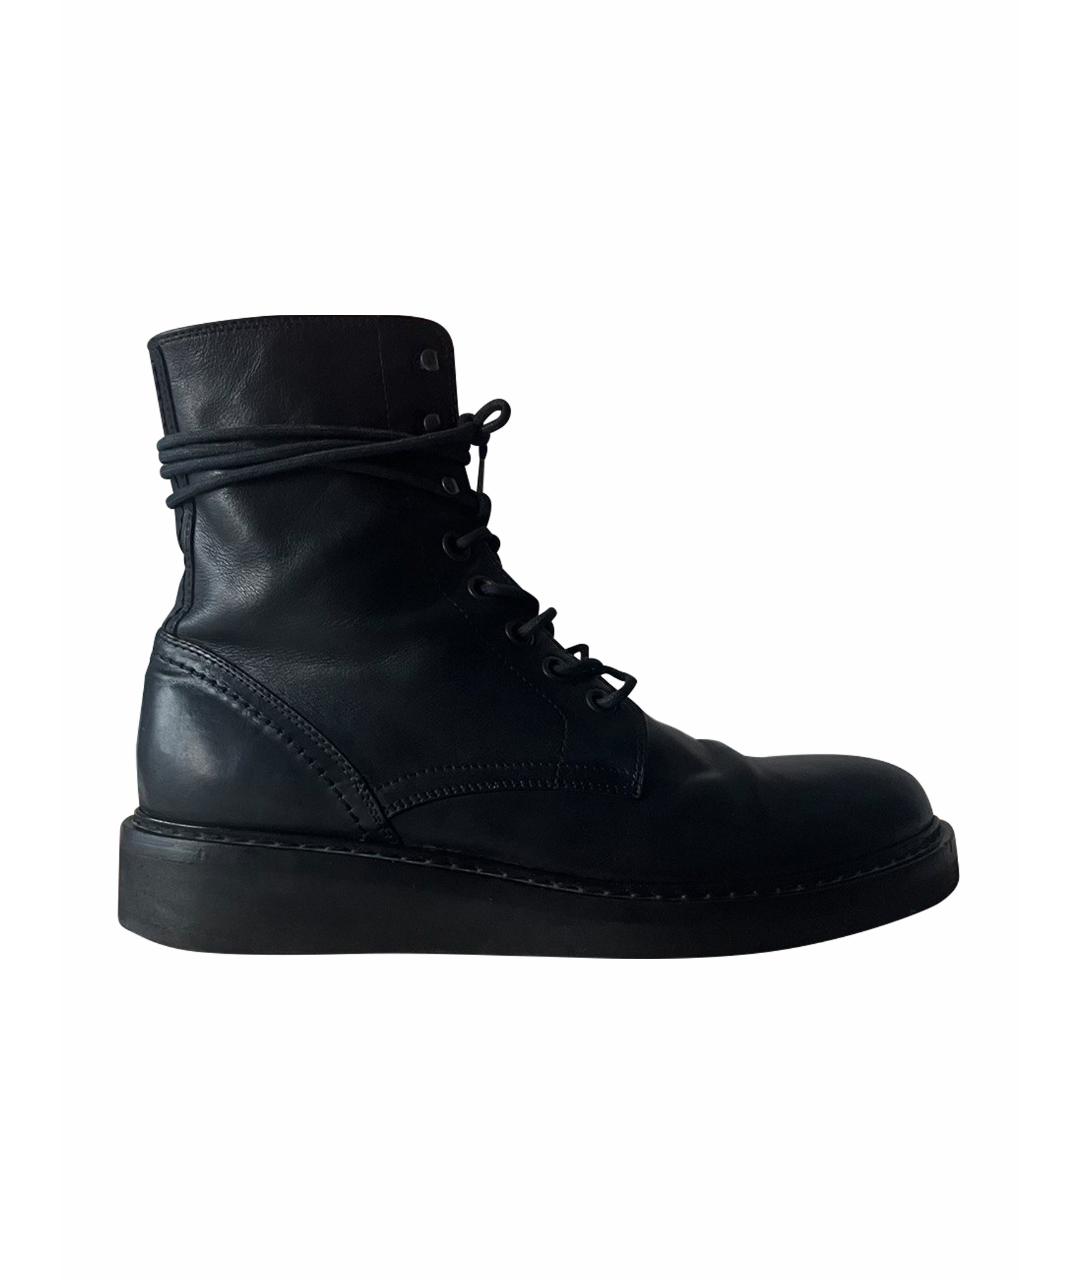 ANN DEMEULEMEESTER Черные кожаные высокие ботинки, фото 1